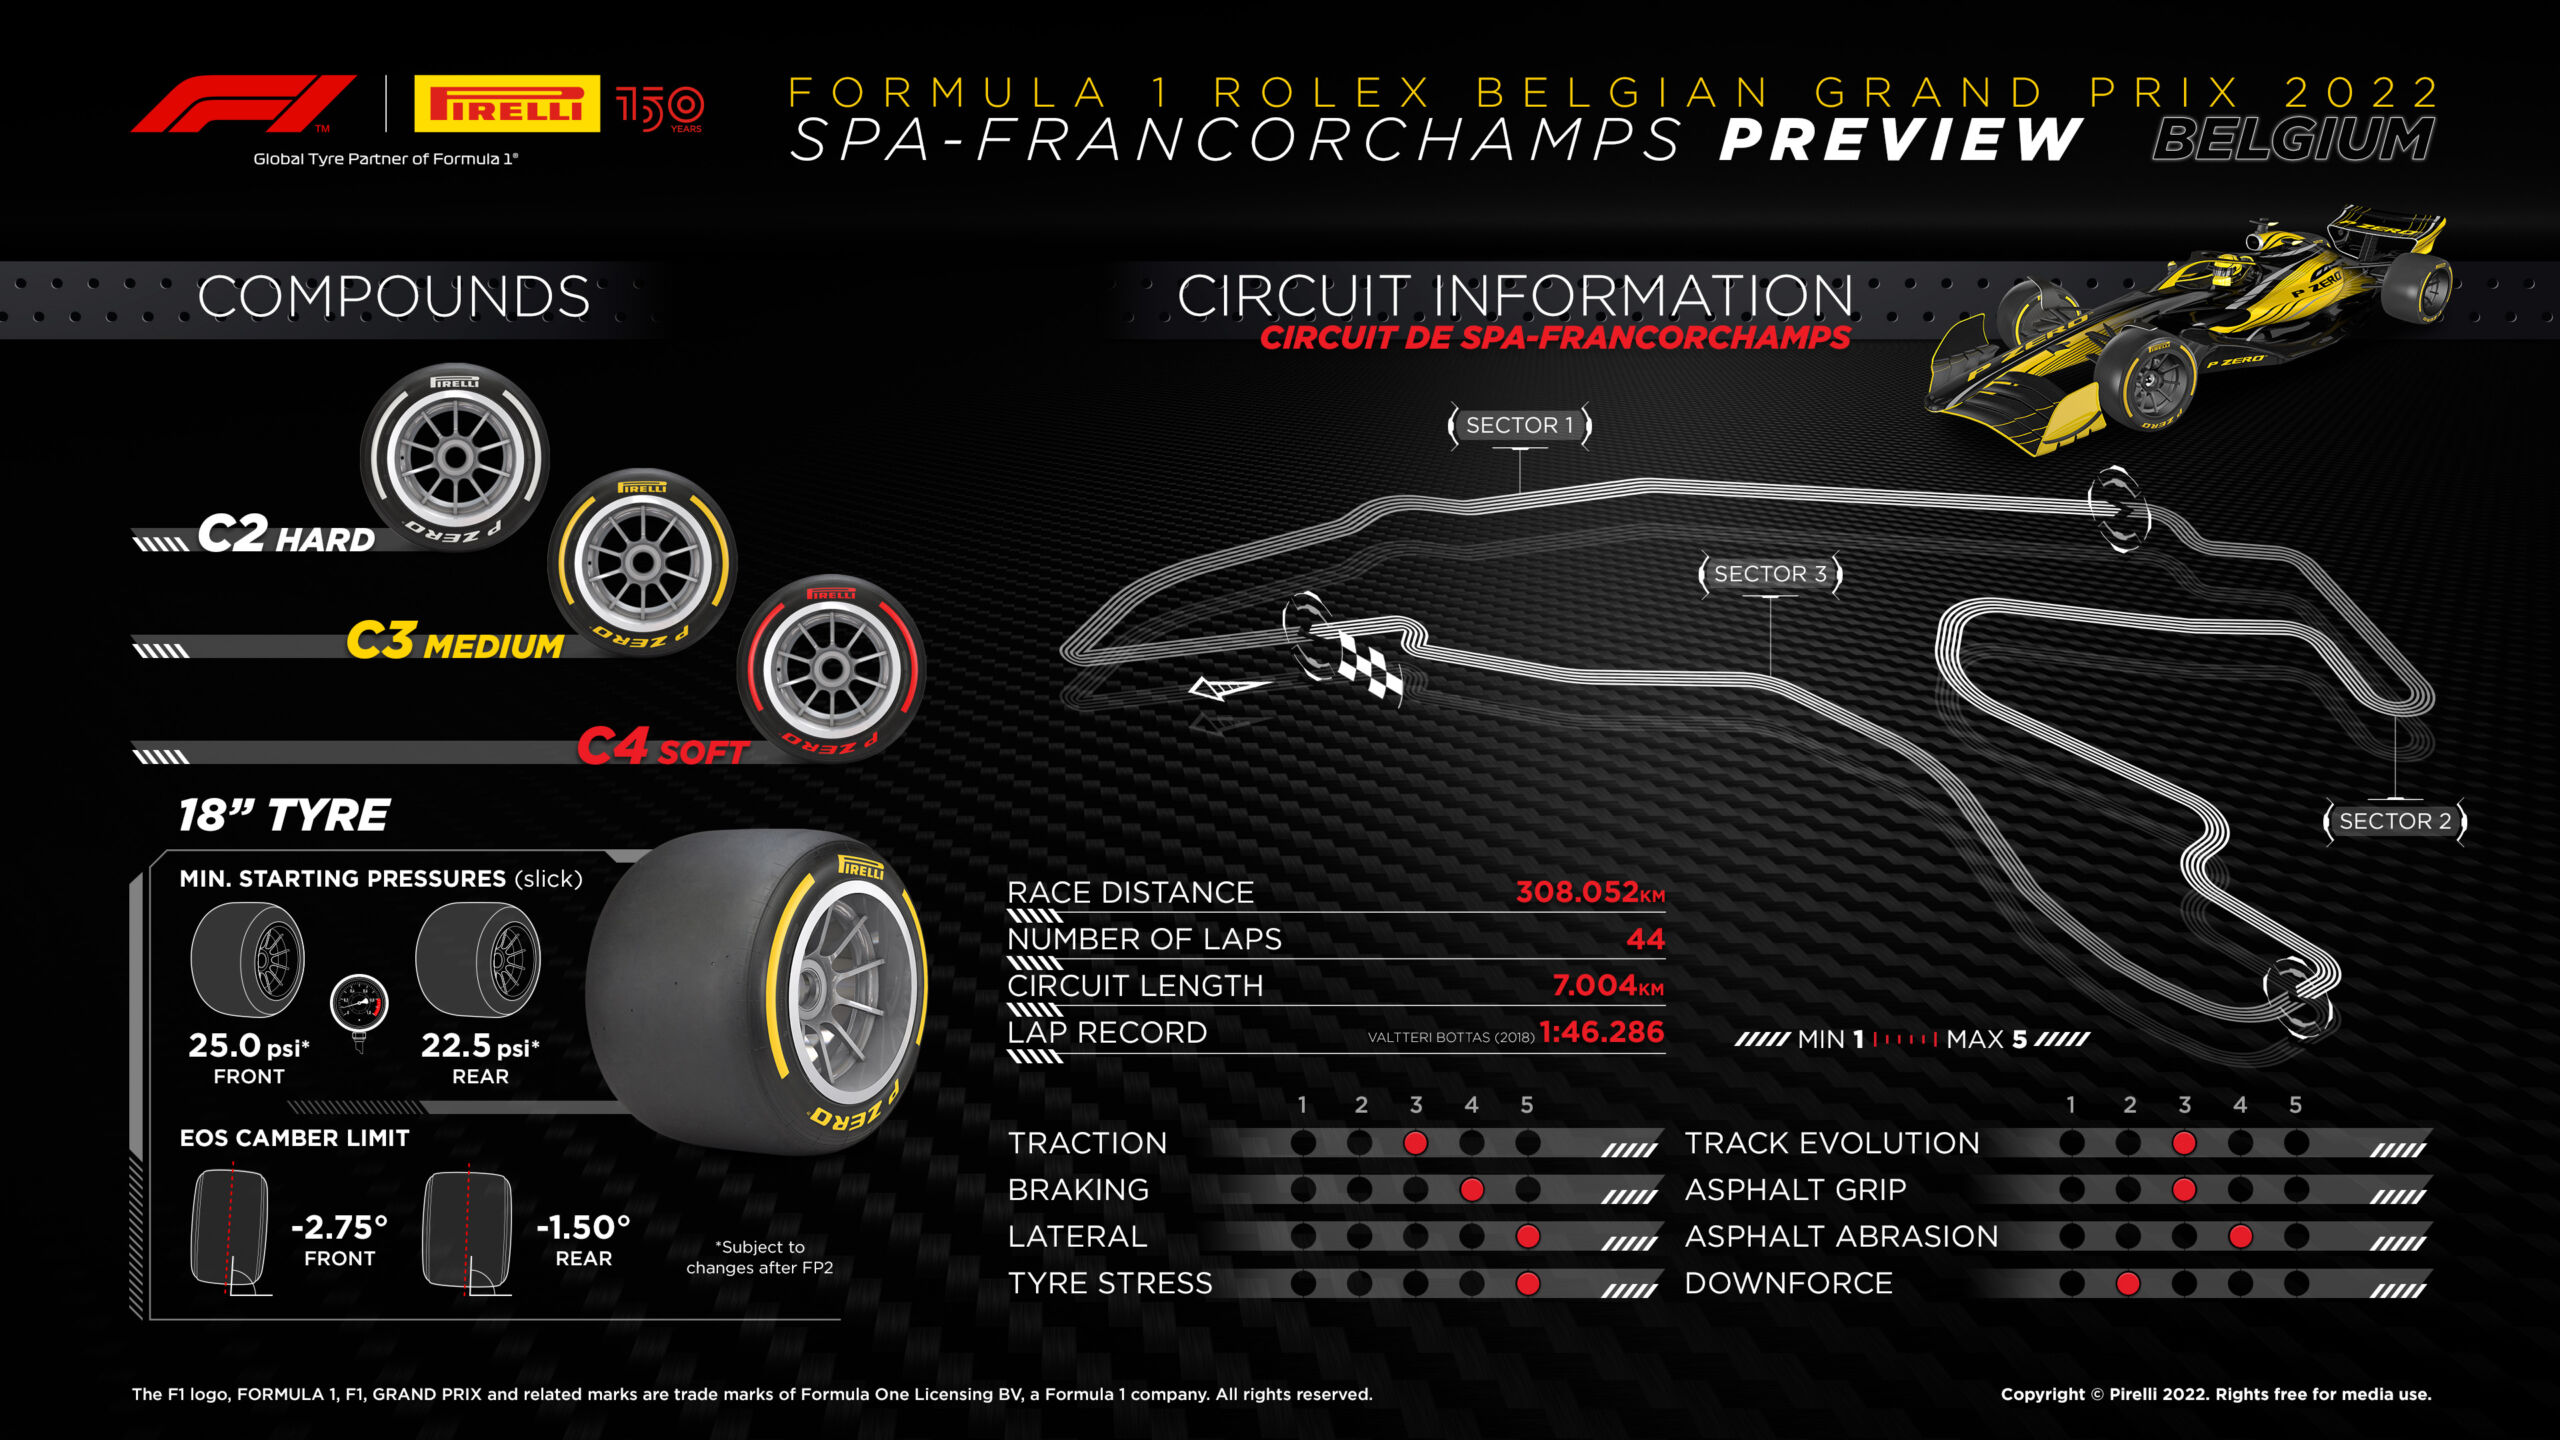 2022 Belgian Grand Prix Tyre Compounds